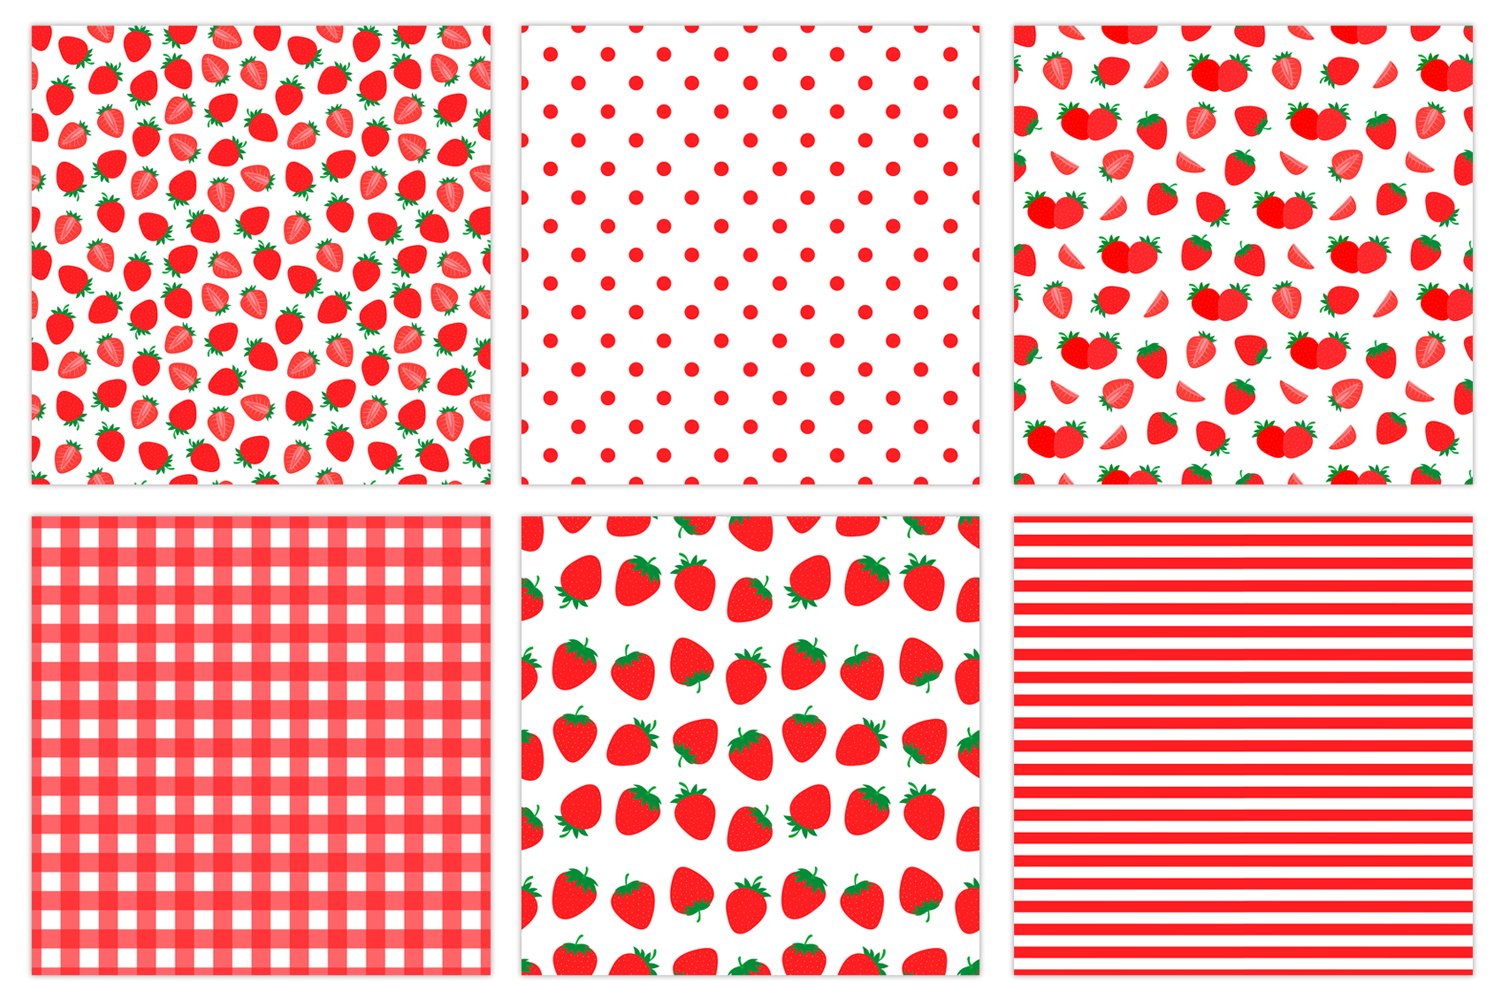 Big diversity of strawberries patterns.